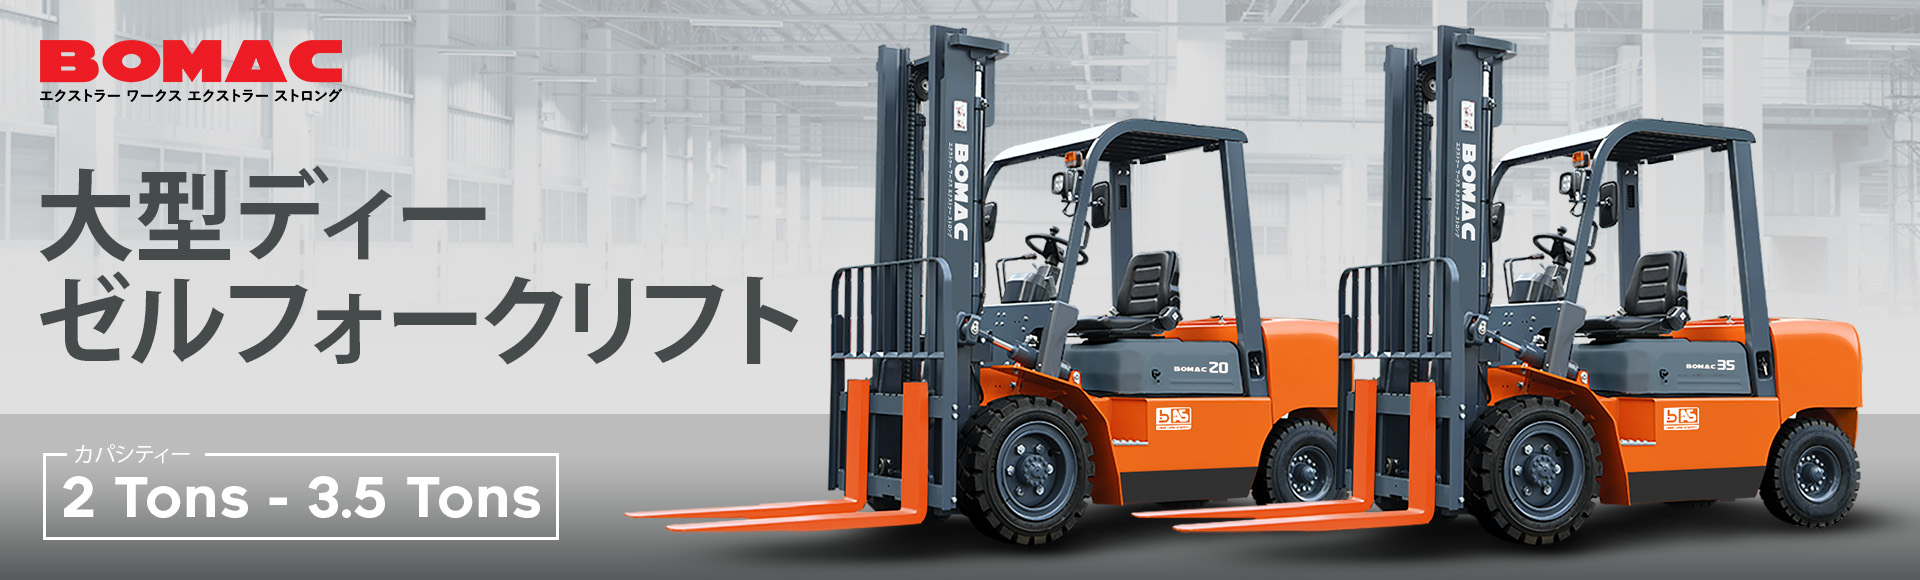 Banner Bomac Forklift Japan 2 TON - 3.5 TON Japan Ver 1